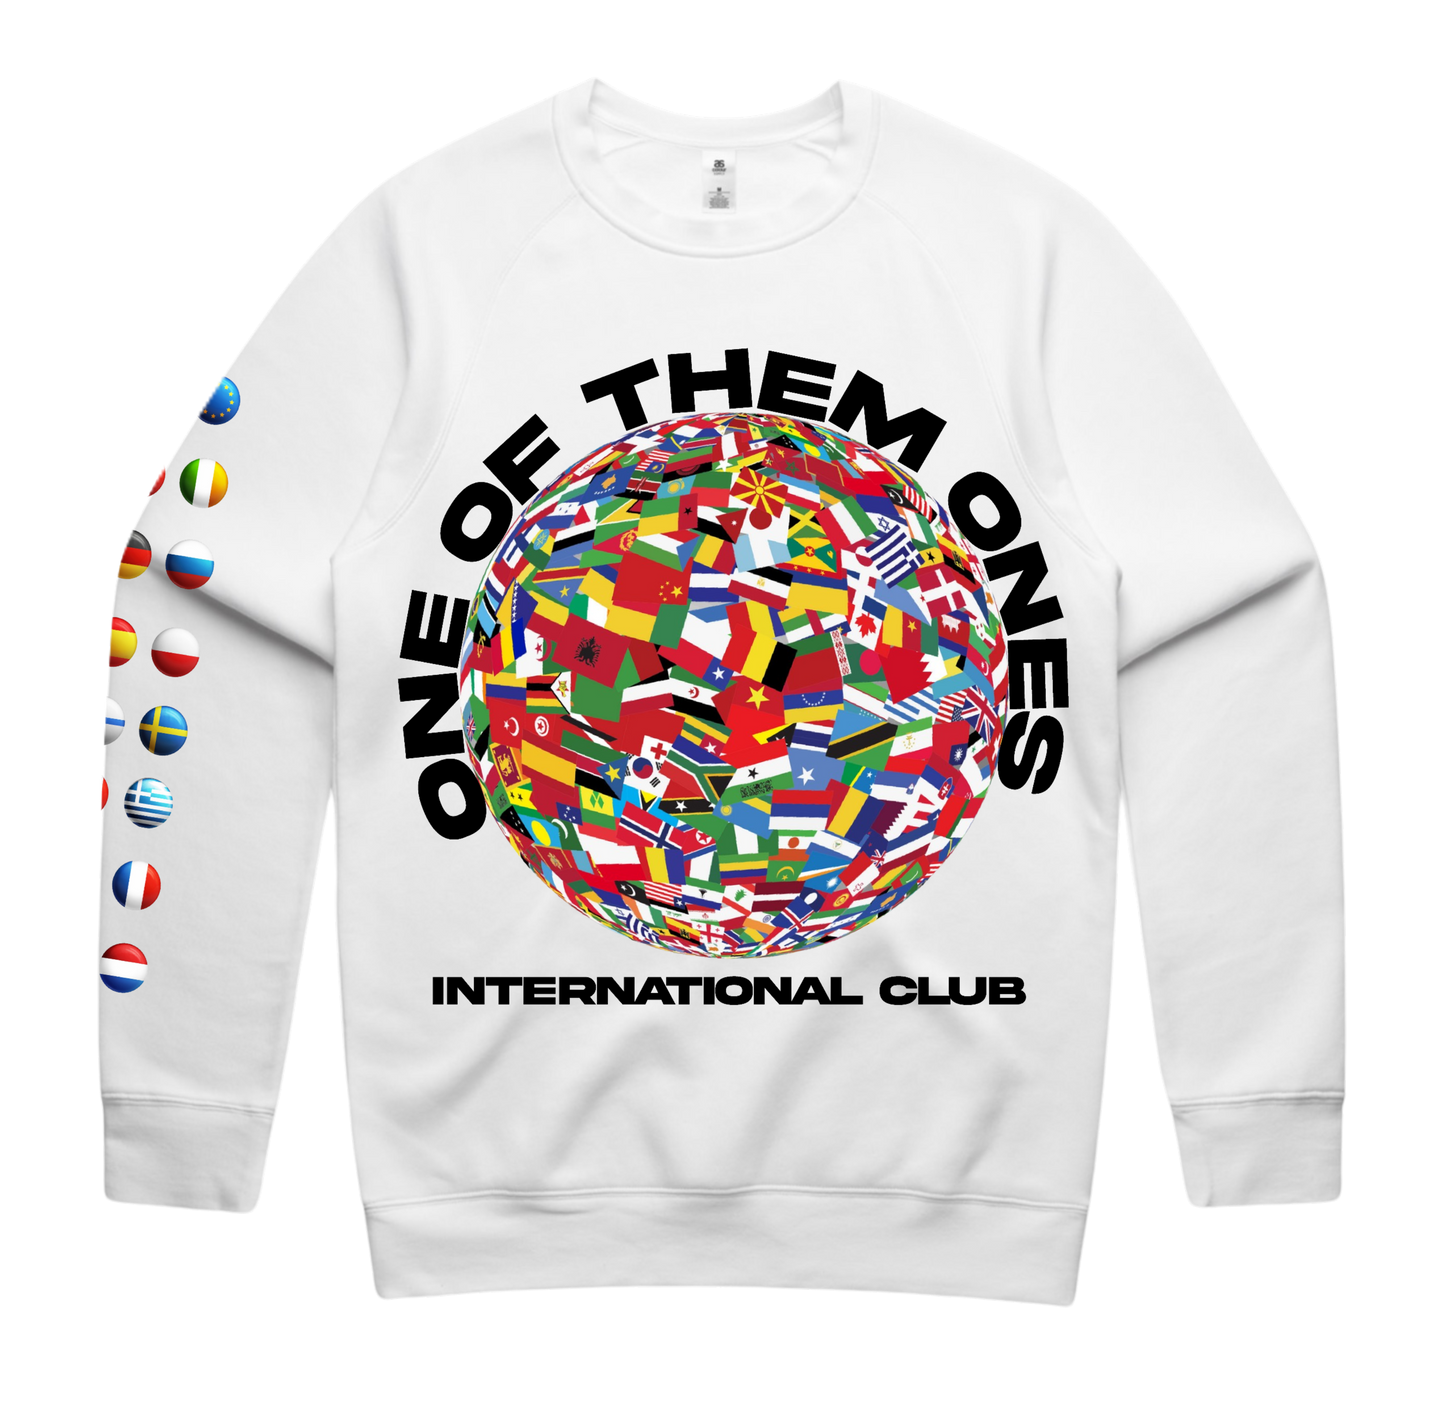 Organik Lyfestyle - 1OFTHEM1's International Club - White Crewneck